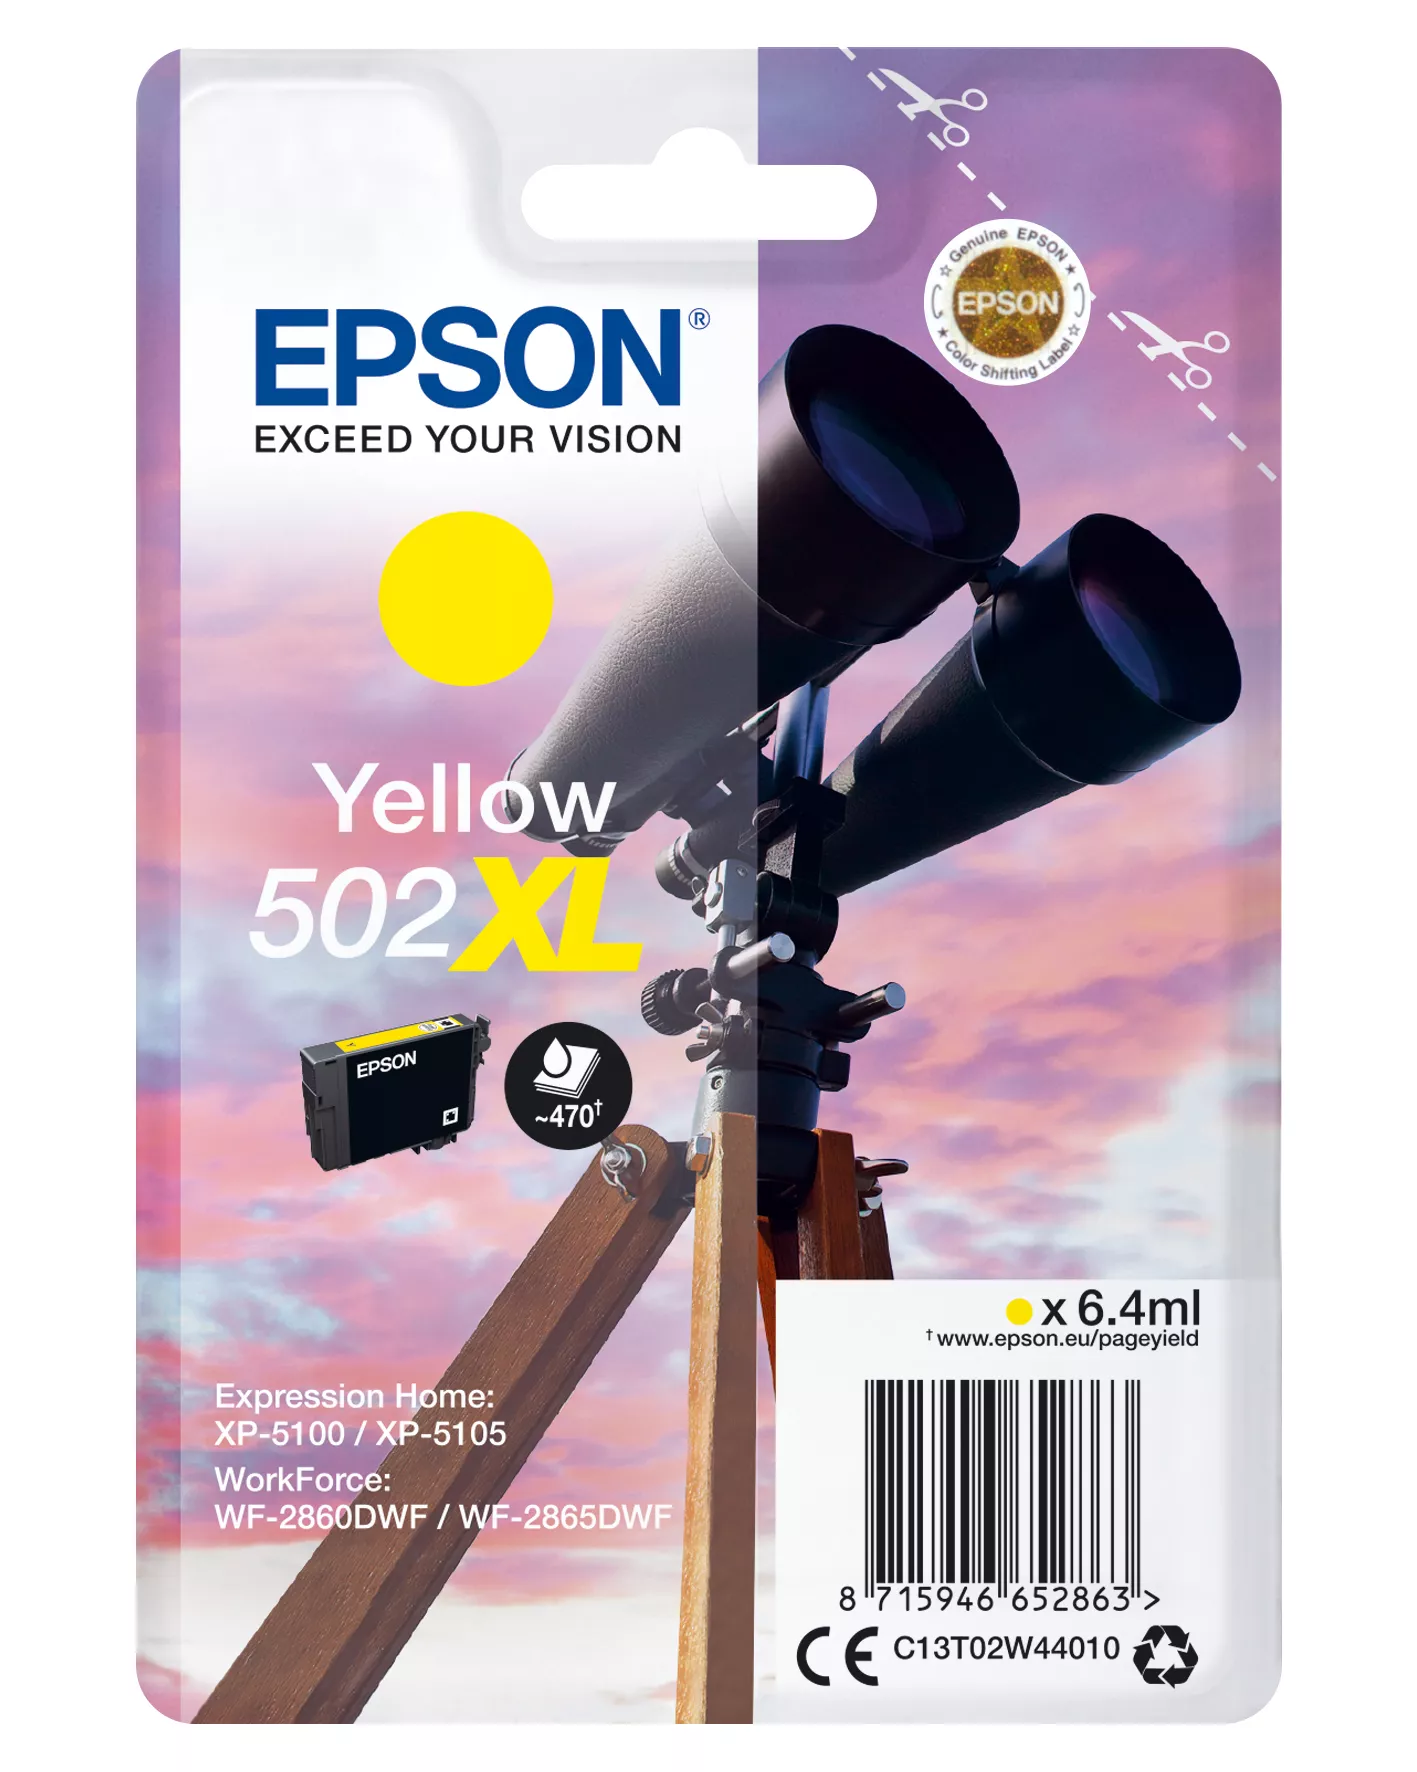 Achat EPSON Singlepack Yellow 502XL Ink SEC au meilleur prix